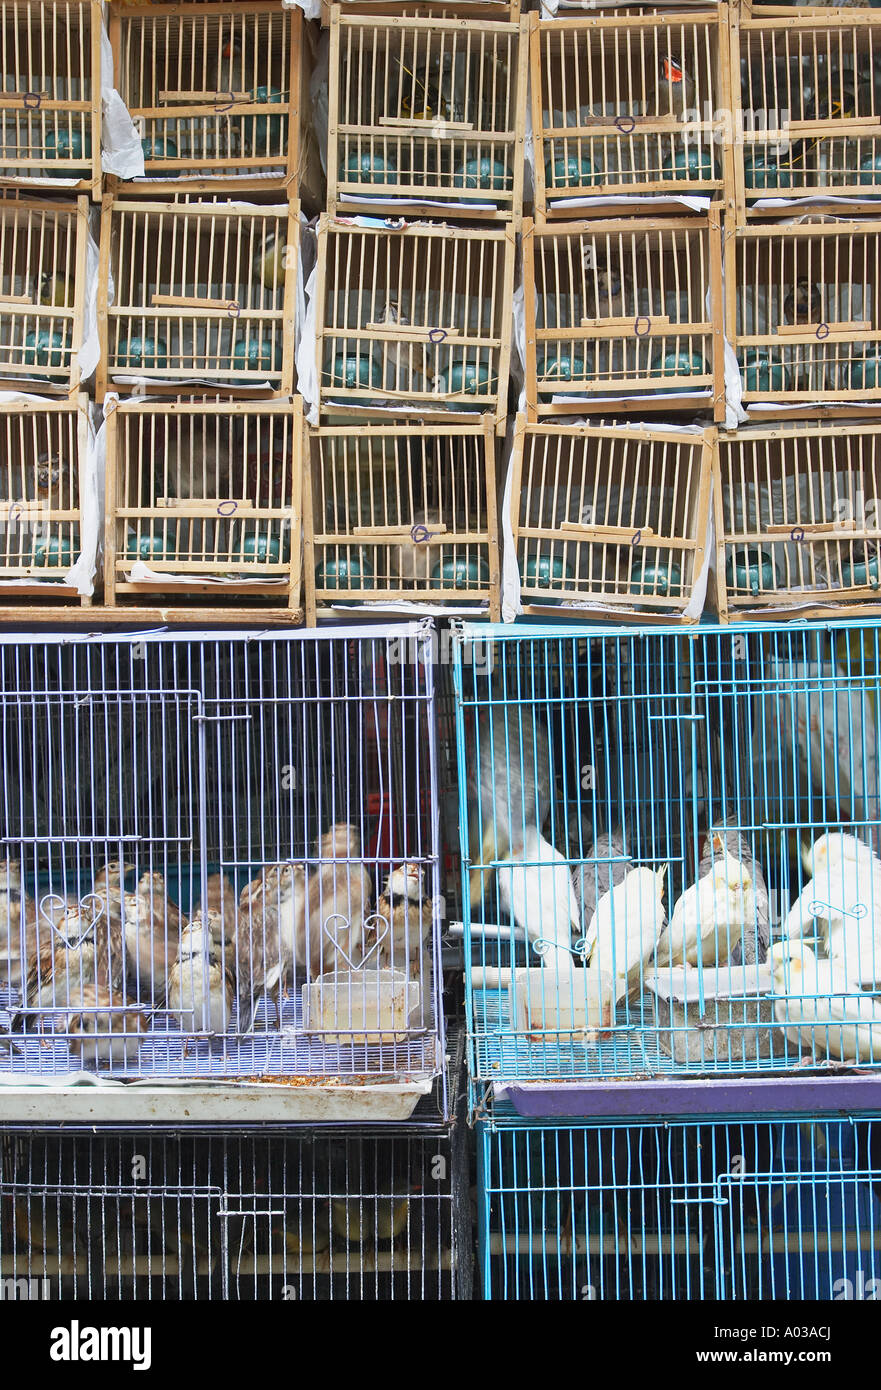 Jaulas para pájaros de madera, Hong Kong Fotografía de stock - Alamy